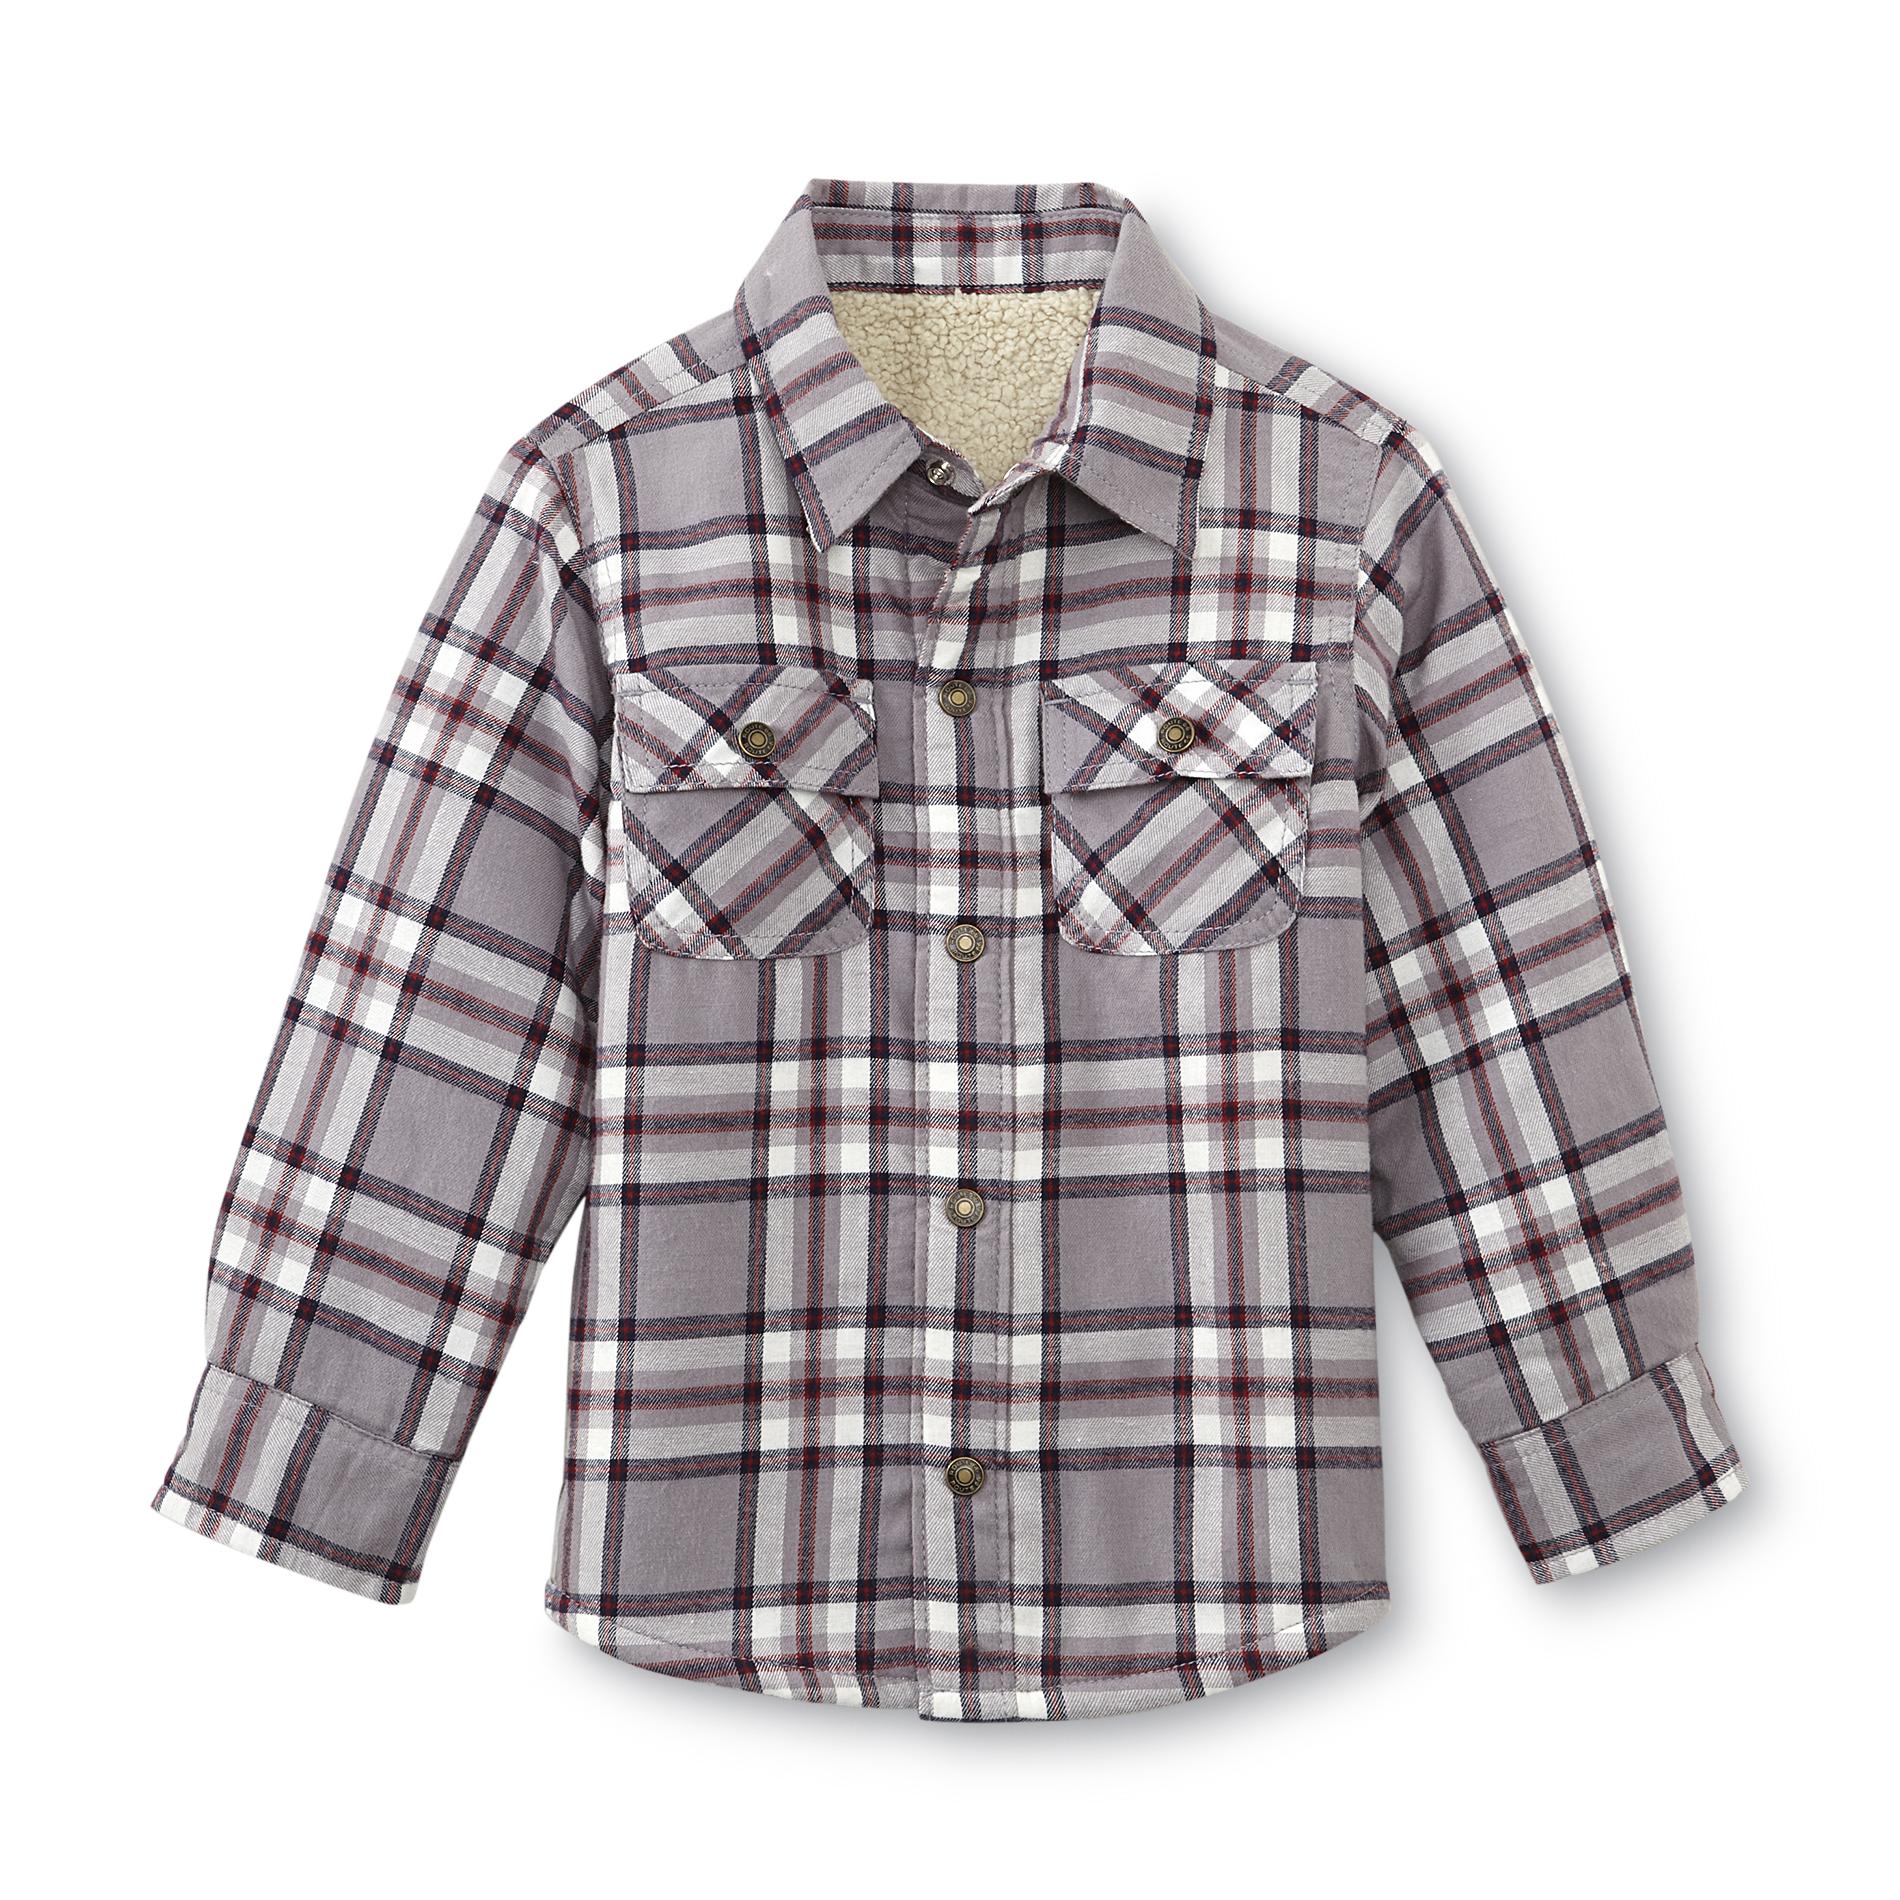 Newborn Boy's Flannel Shirt - Plaid